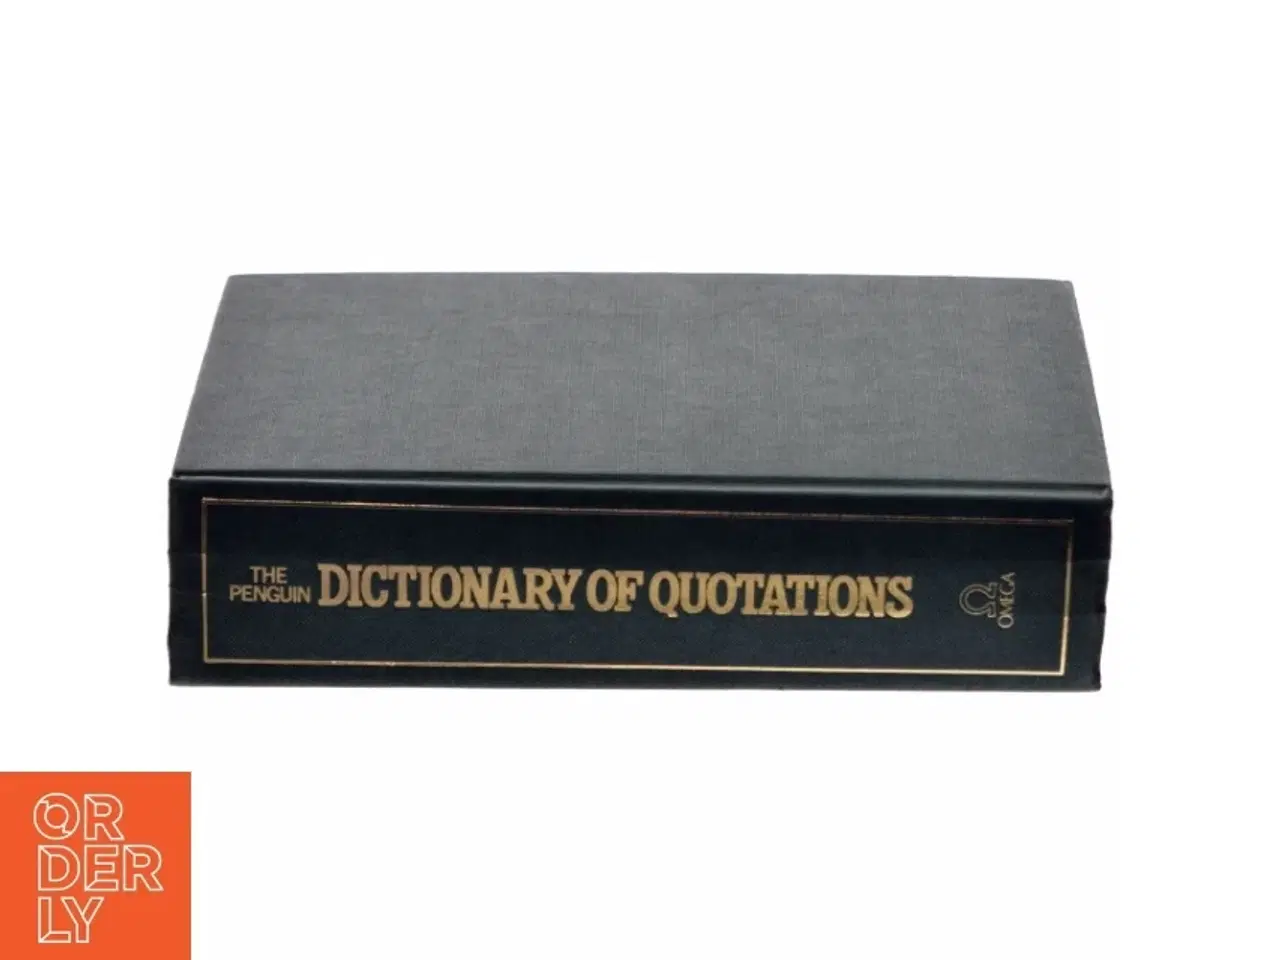 Billede 2 - Penguin Dictionary of Quotations fra Penguin